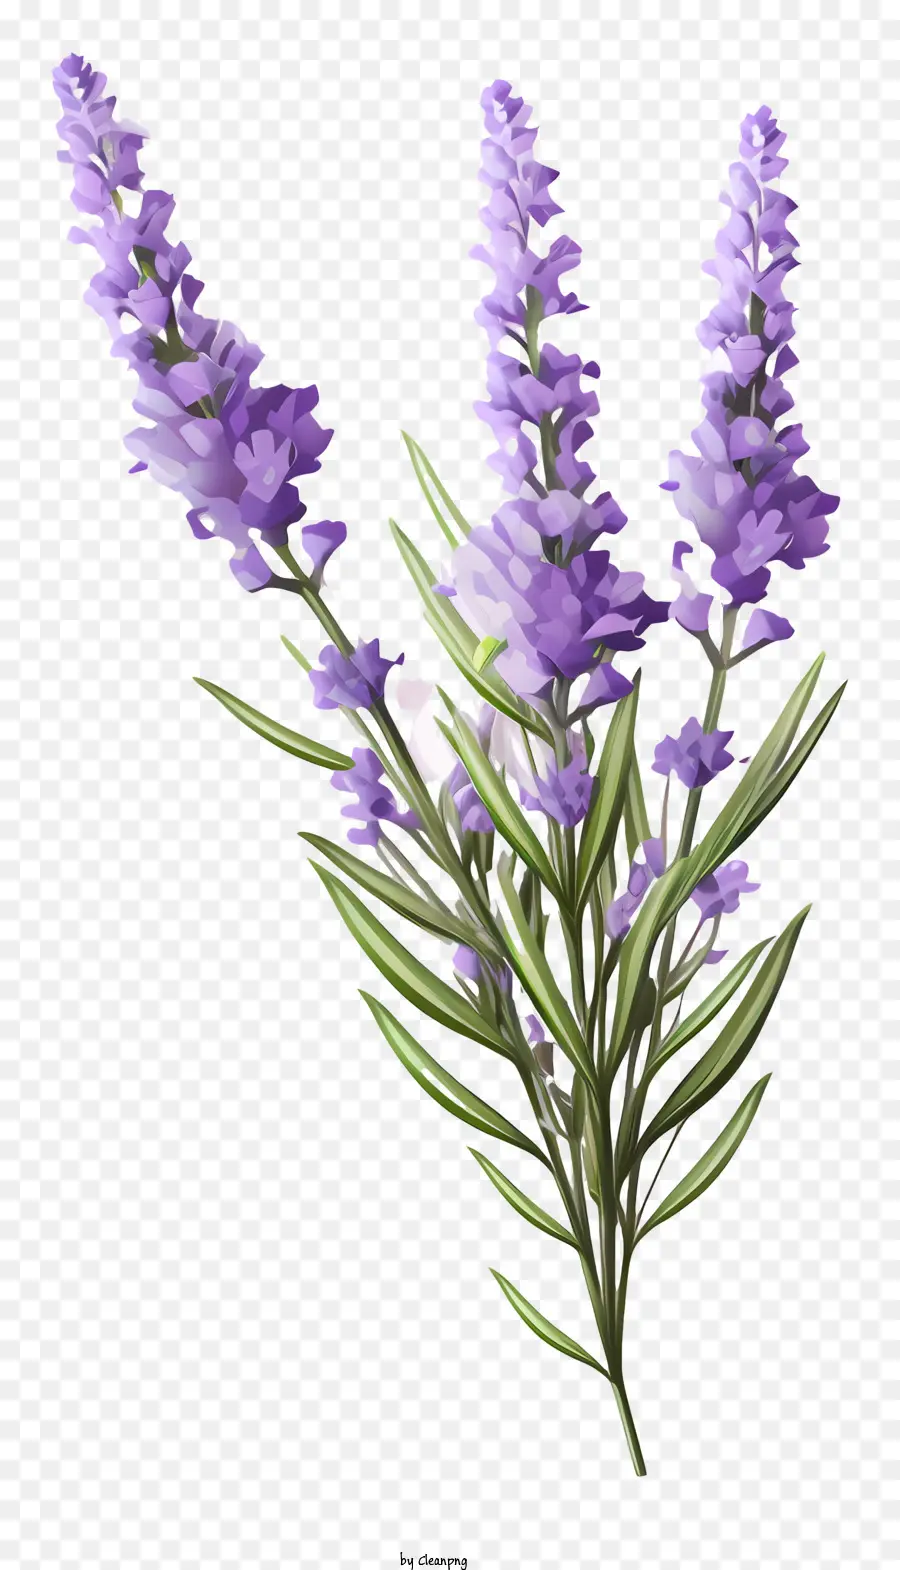 Hoa hoa oải hương hoa màu tím - Hoa oải hương màu tím với lá màu xanh lá cây, nền đen